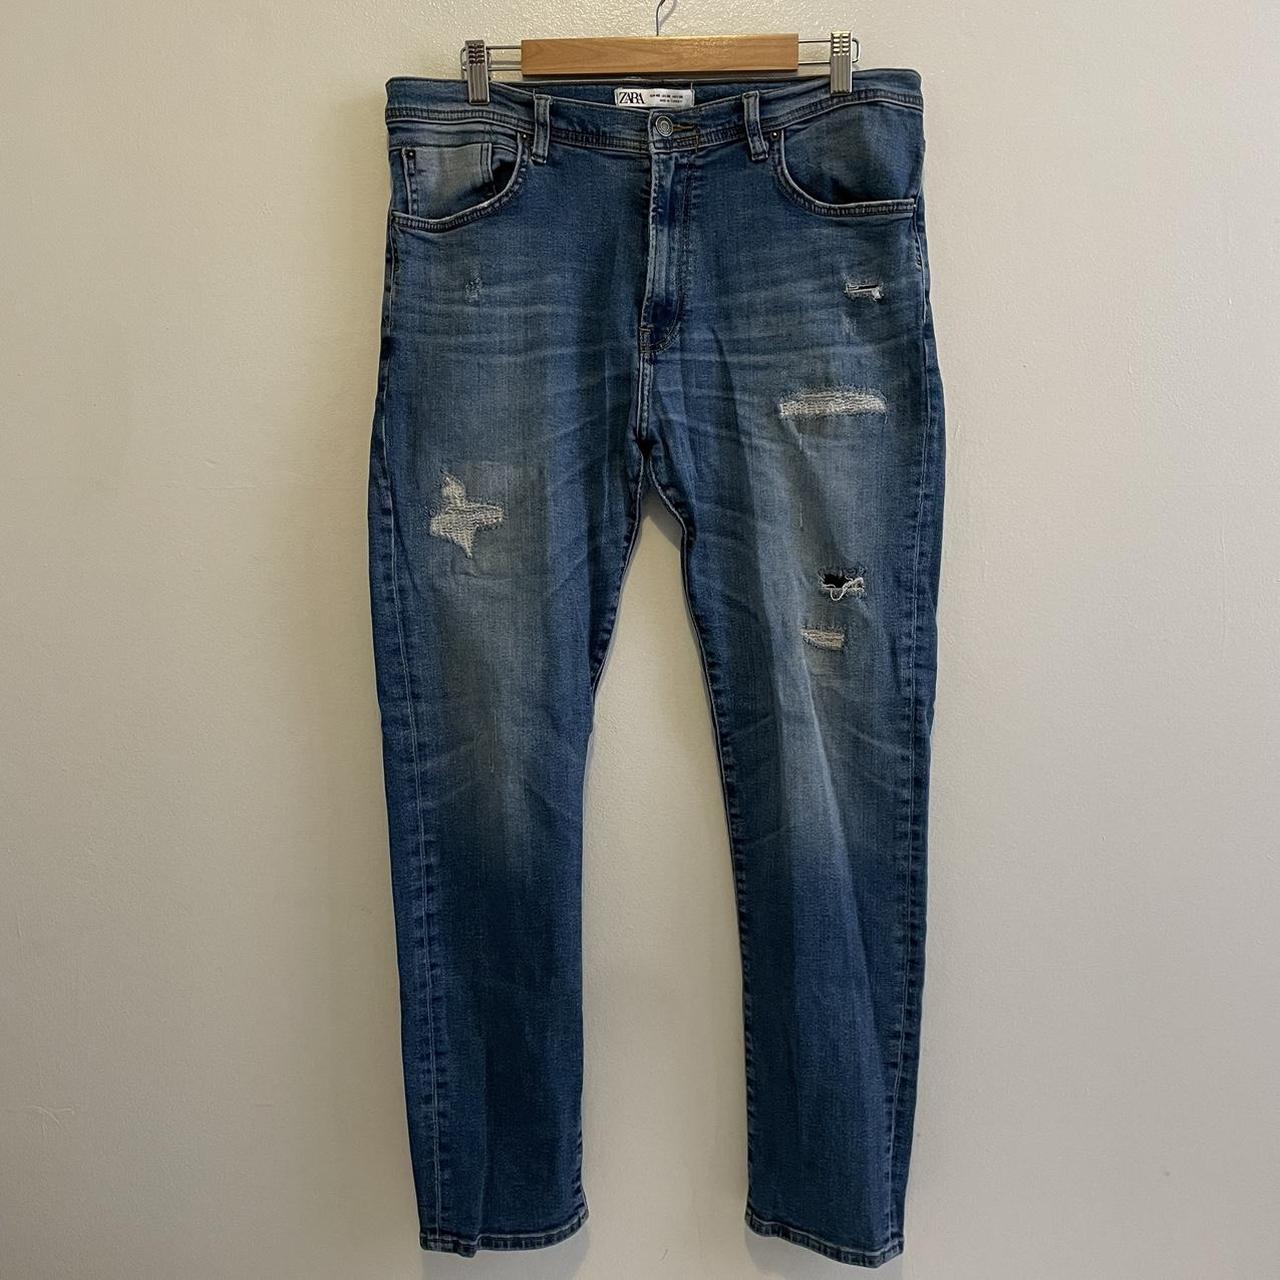 Nice Zara Man skinny ripped jeans - good condition.... - Depop